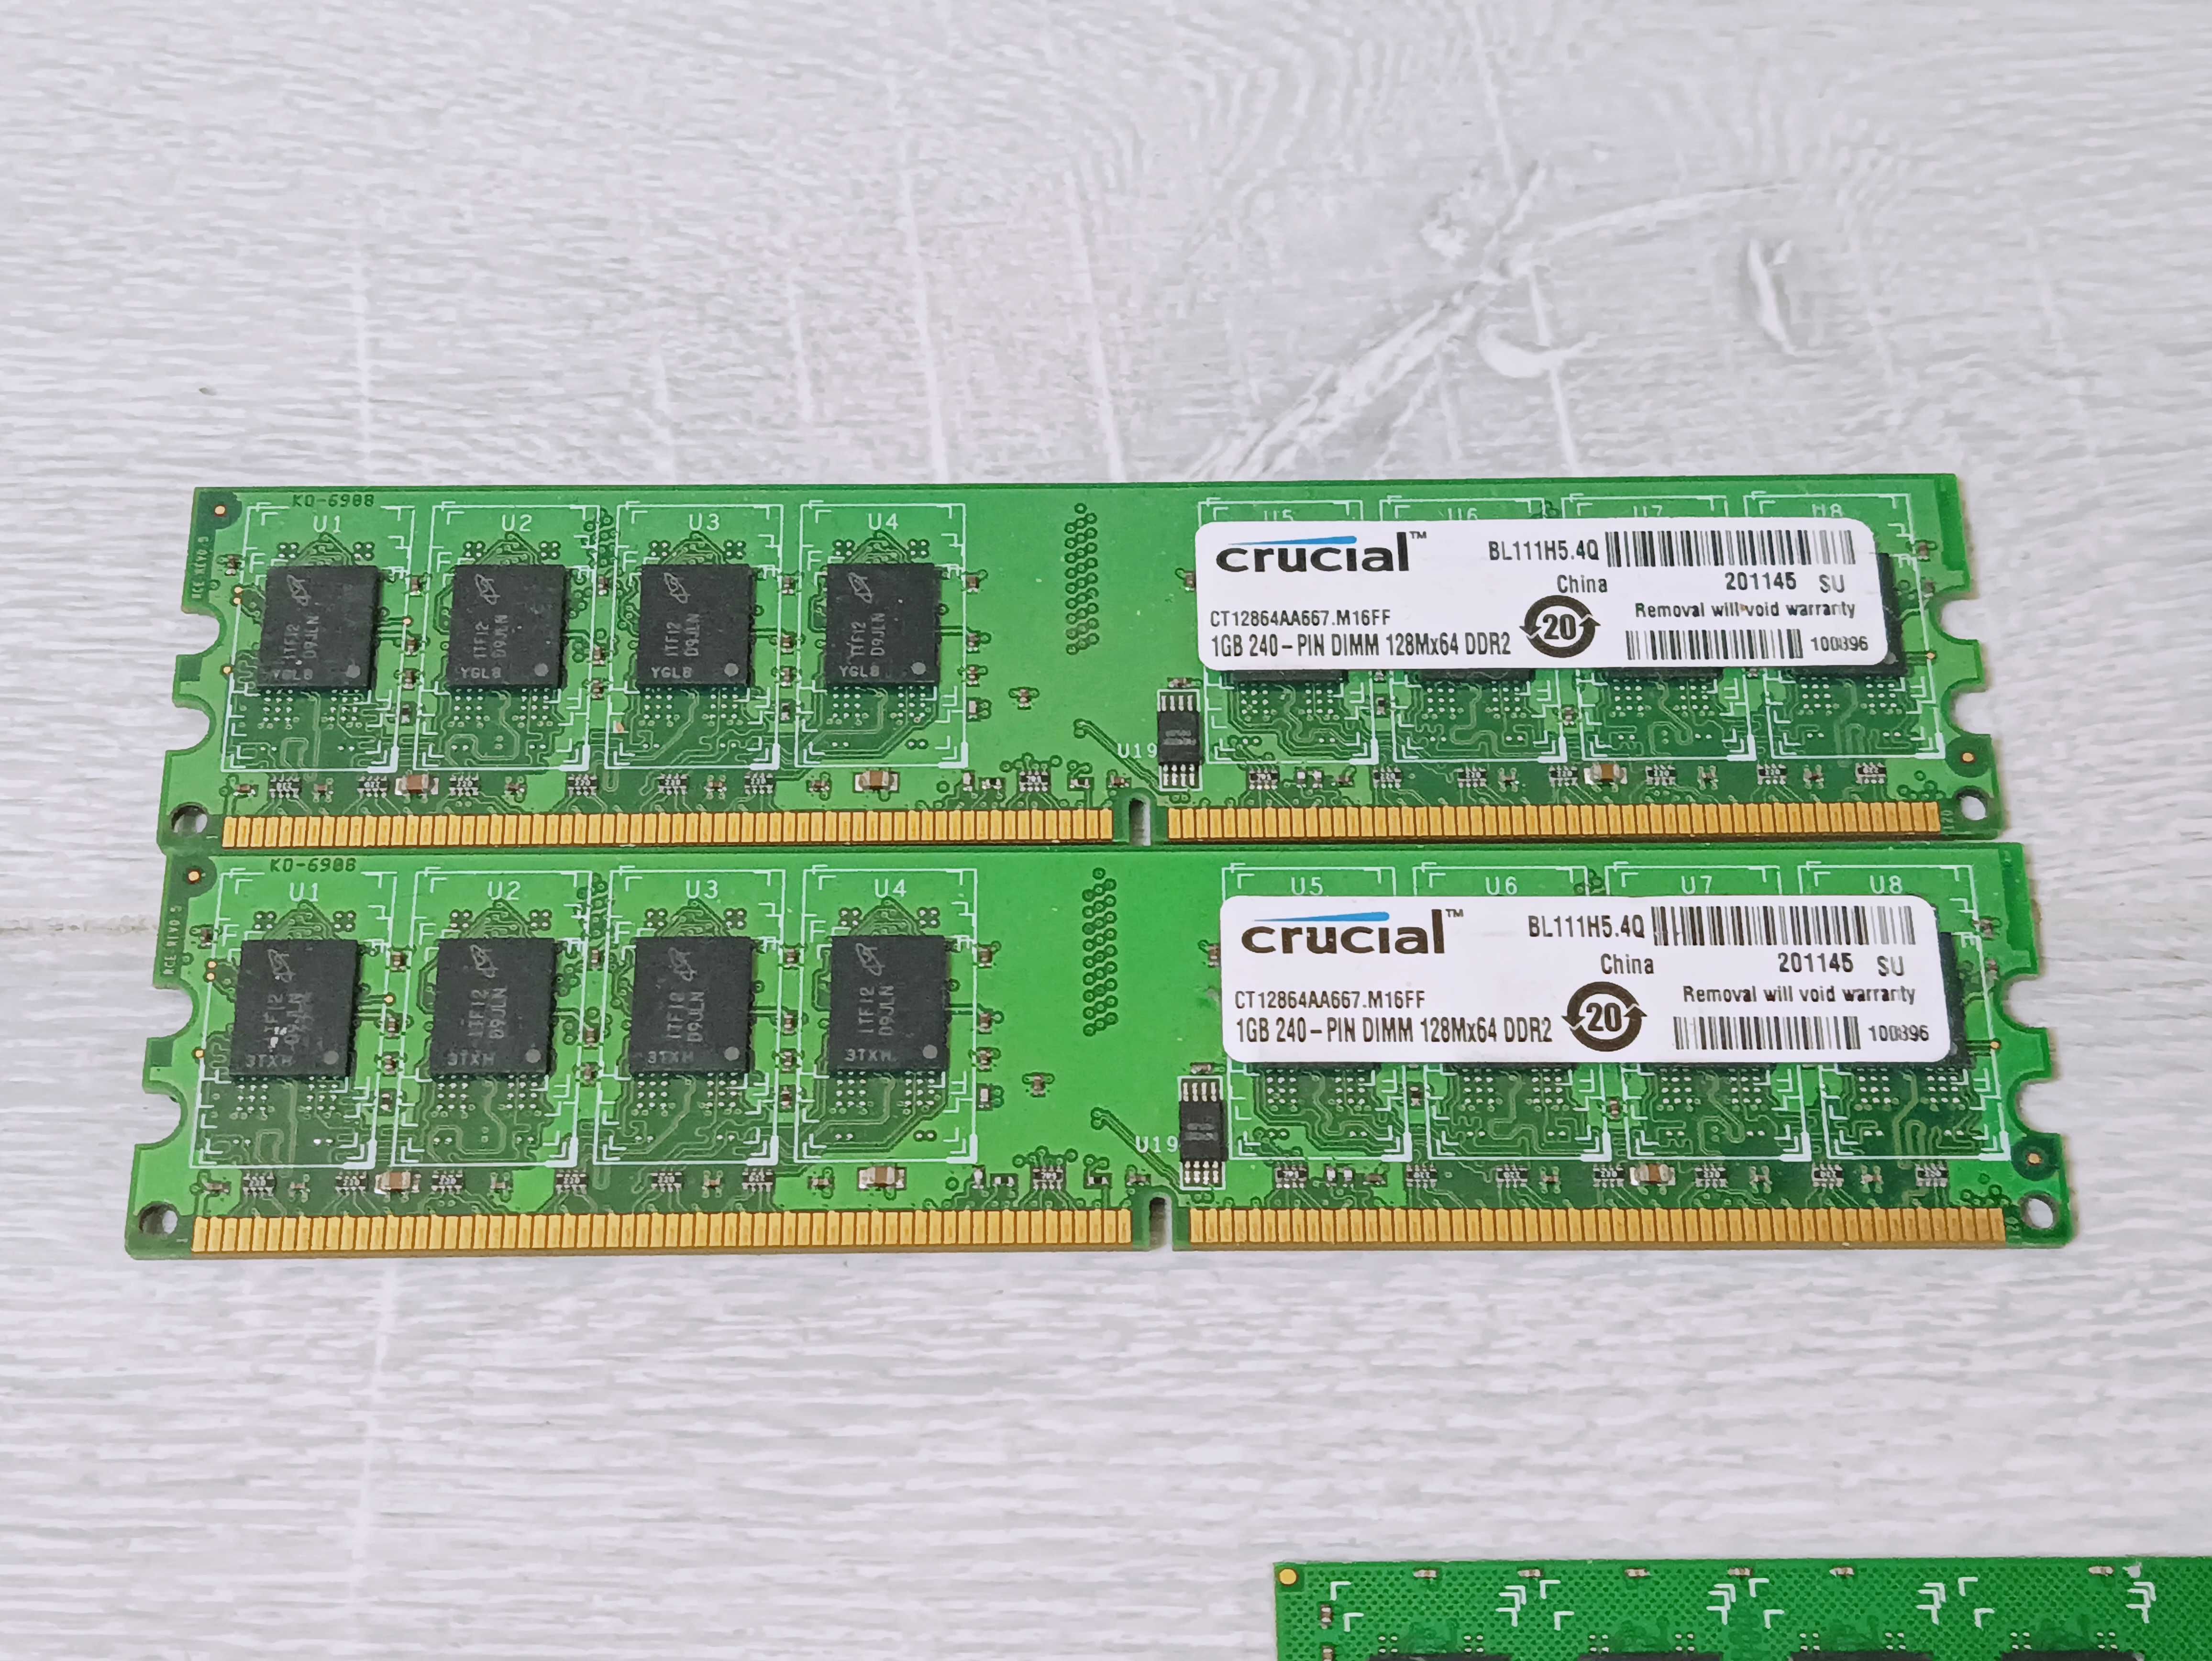 6 штук ддр2 Оперативная память DDR2 для ПК 2гб DDR2 - 667 МГц PC2 5300